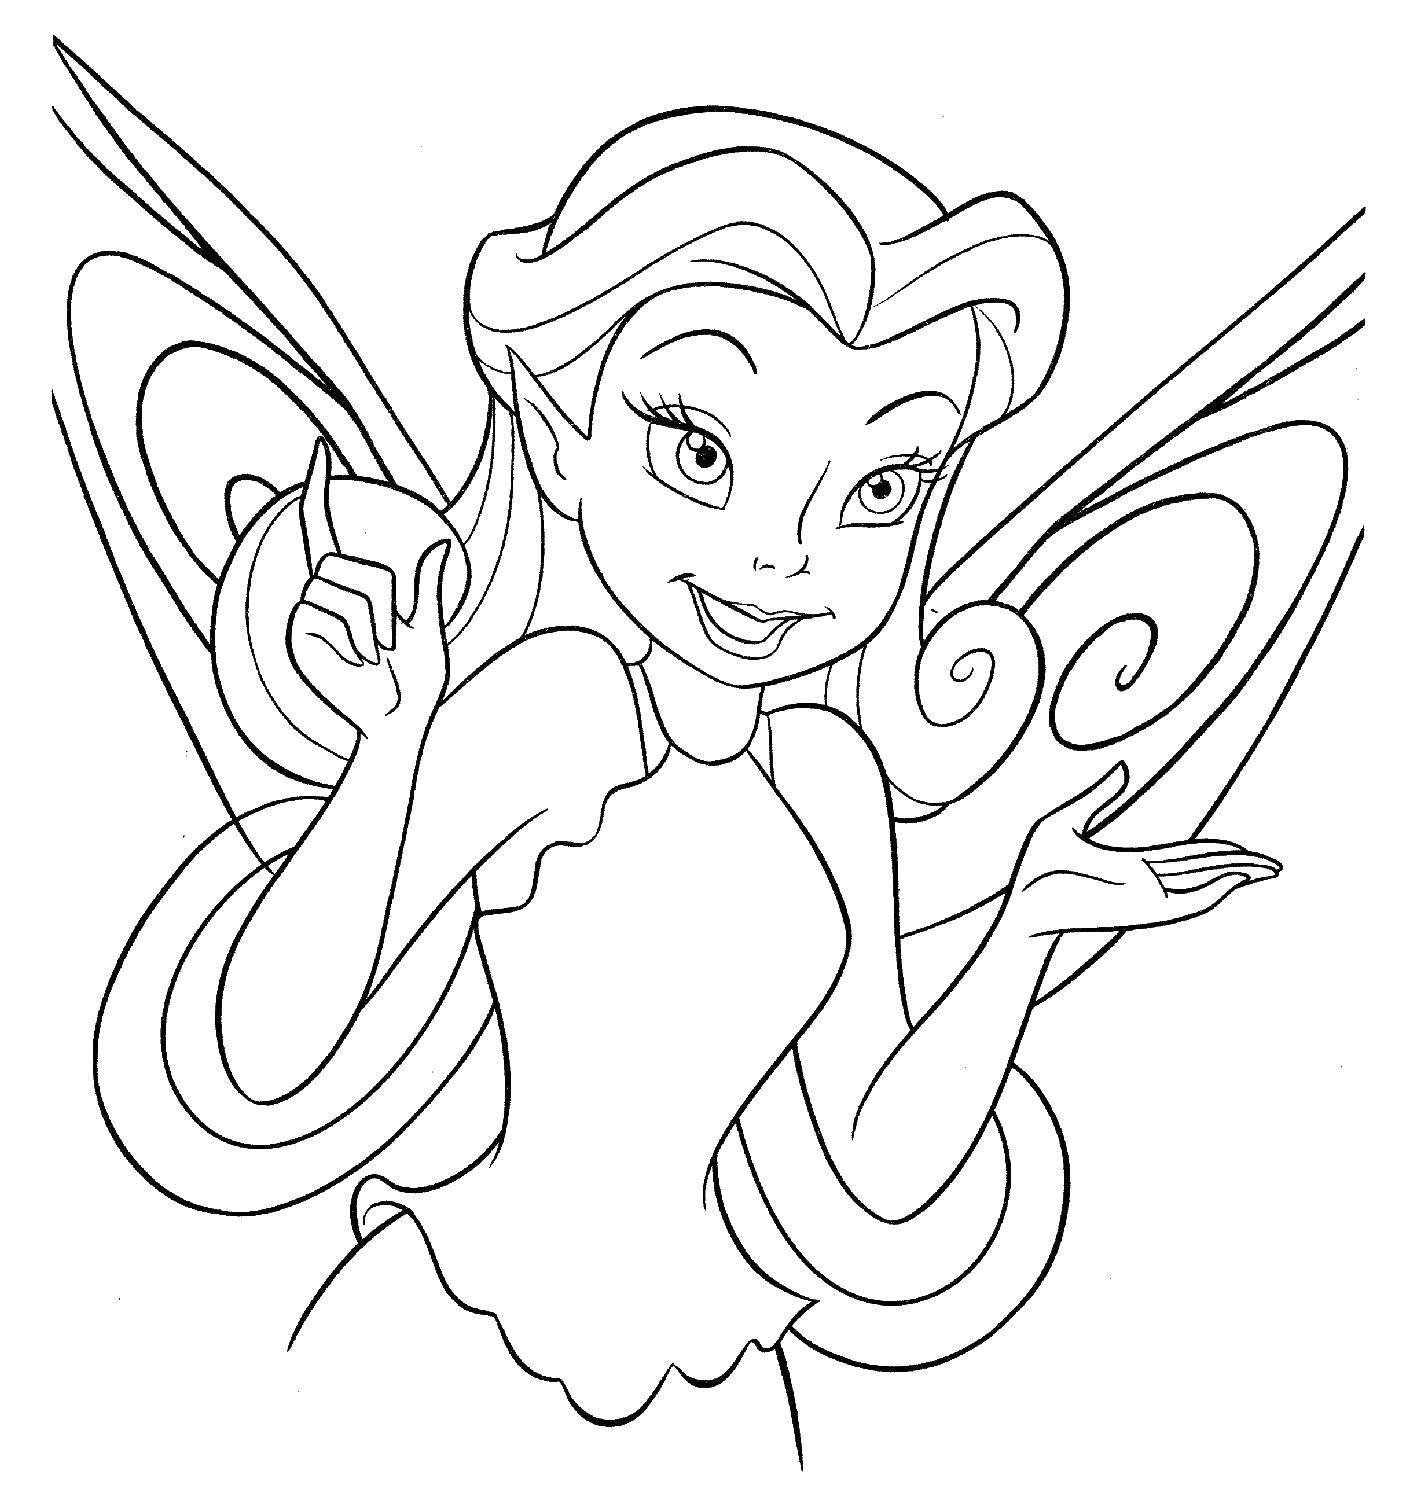 Coloring Fairy Rosetta. Category Disney cartoons. Tags:  fairy, Dindin.